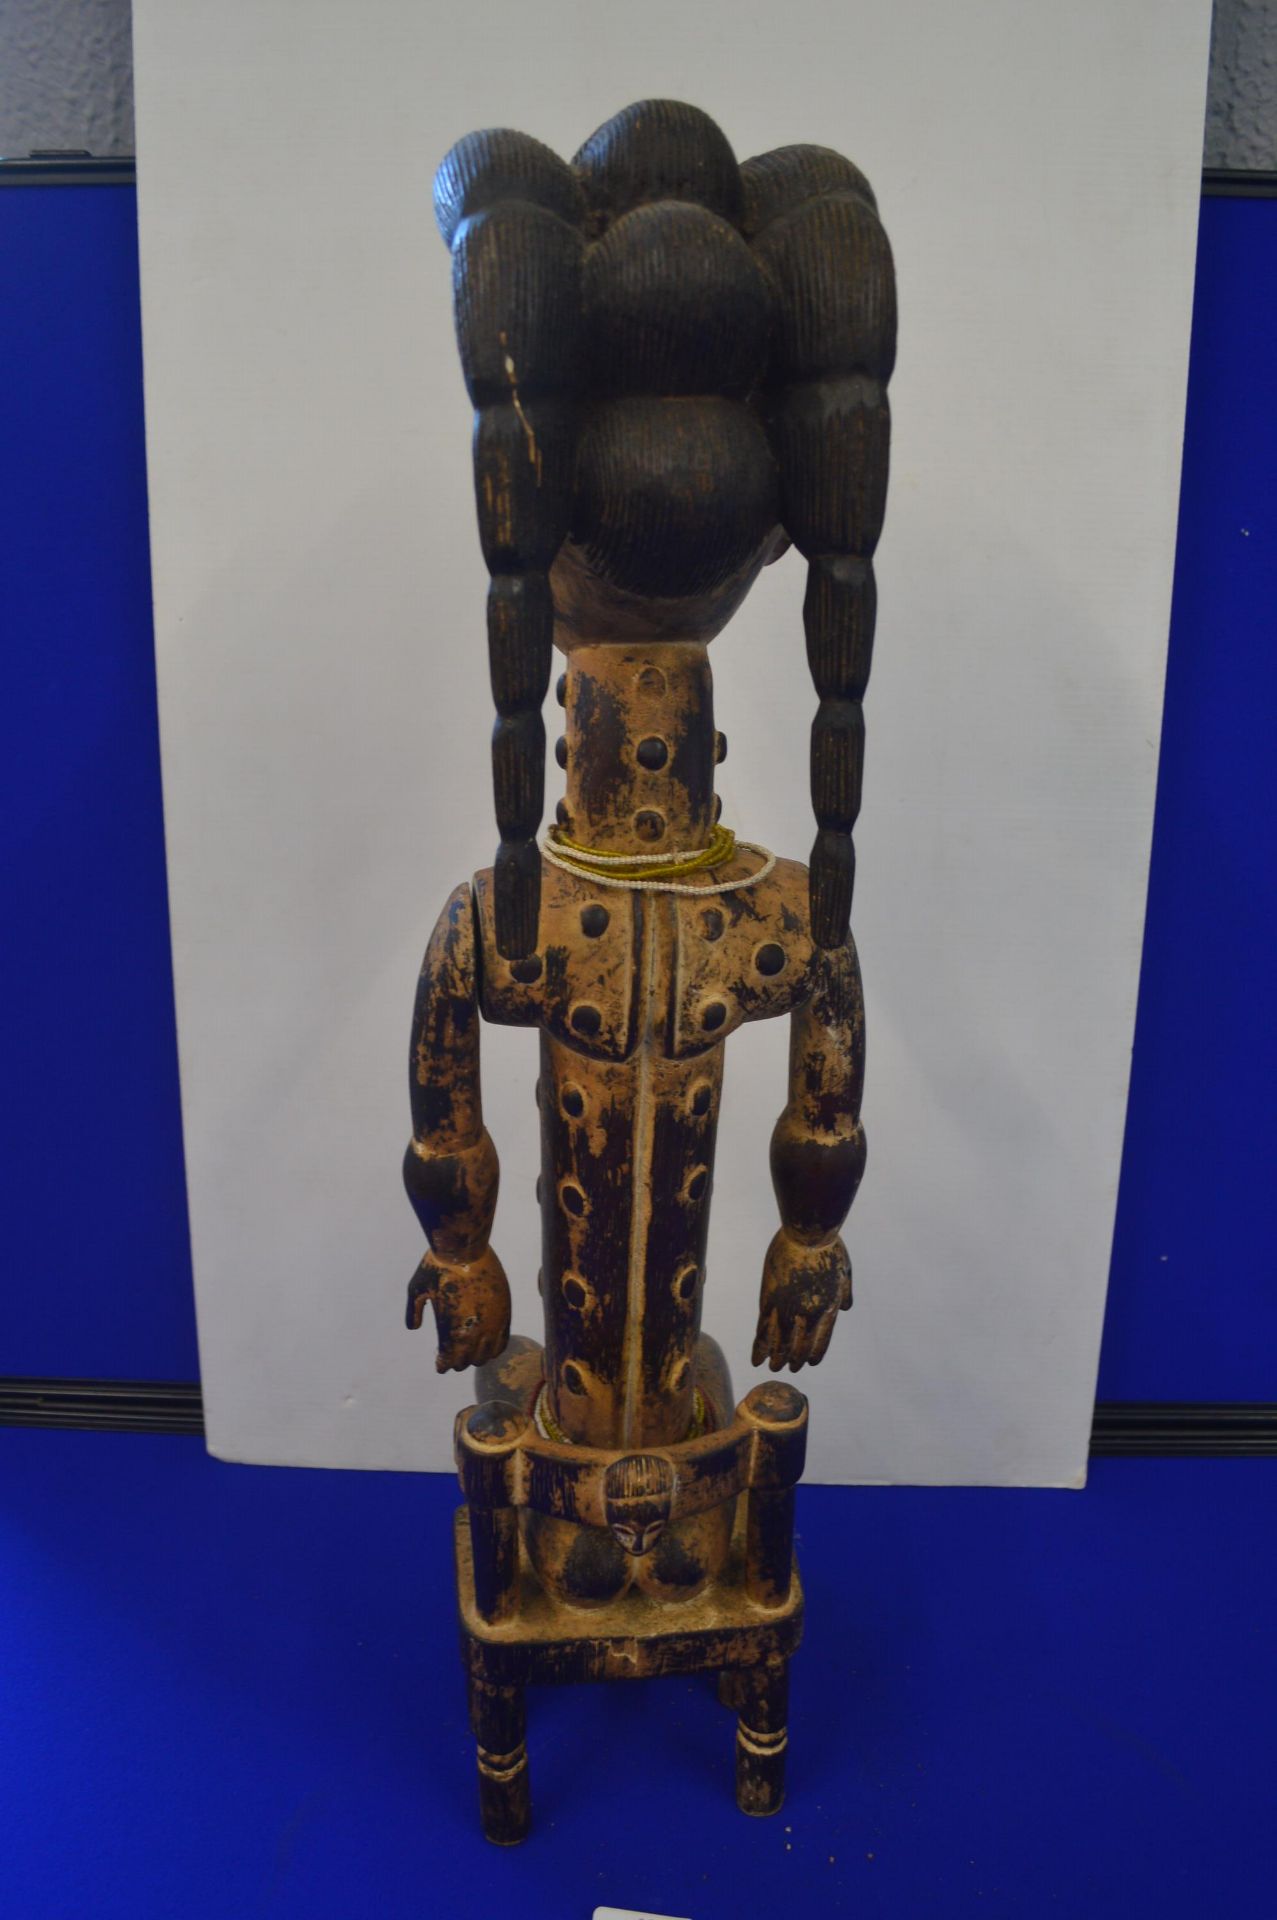 Yoruba Seated Female Fertility Figure with Mechanical Arms - Image 4 of 5